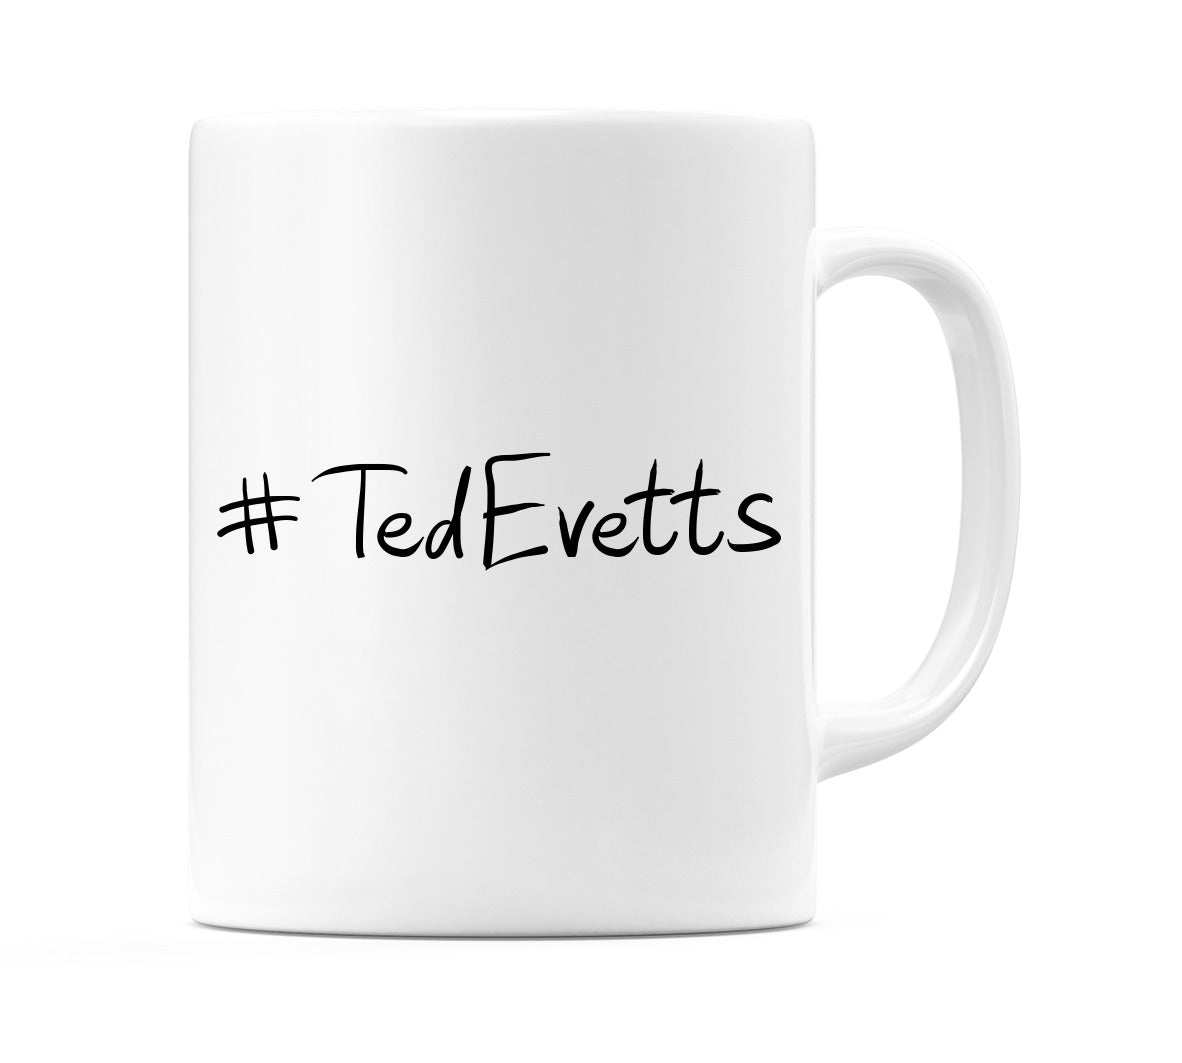 #TedEvetts Mug